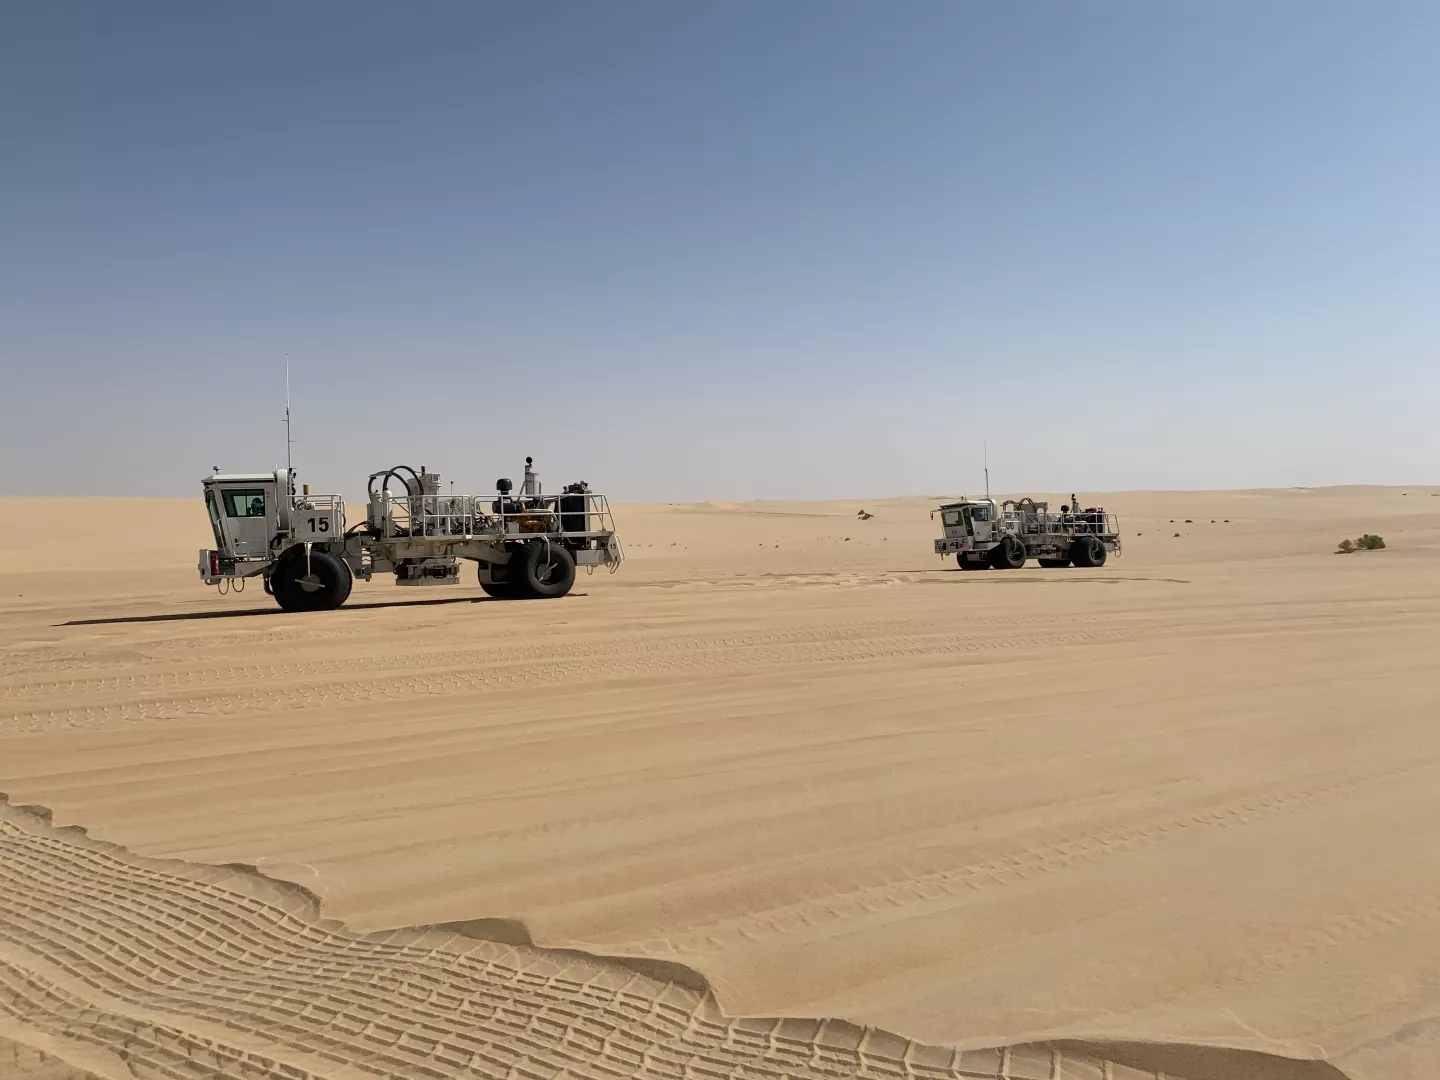 Nomad dry land sand 